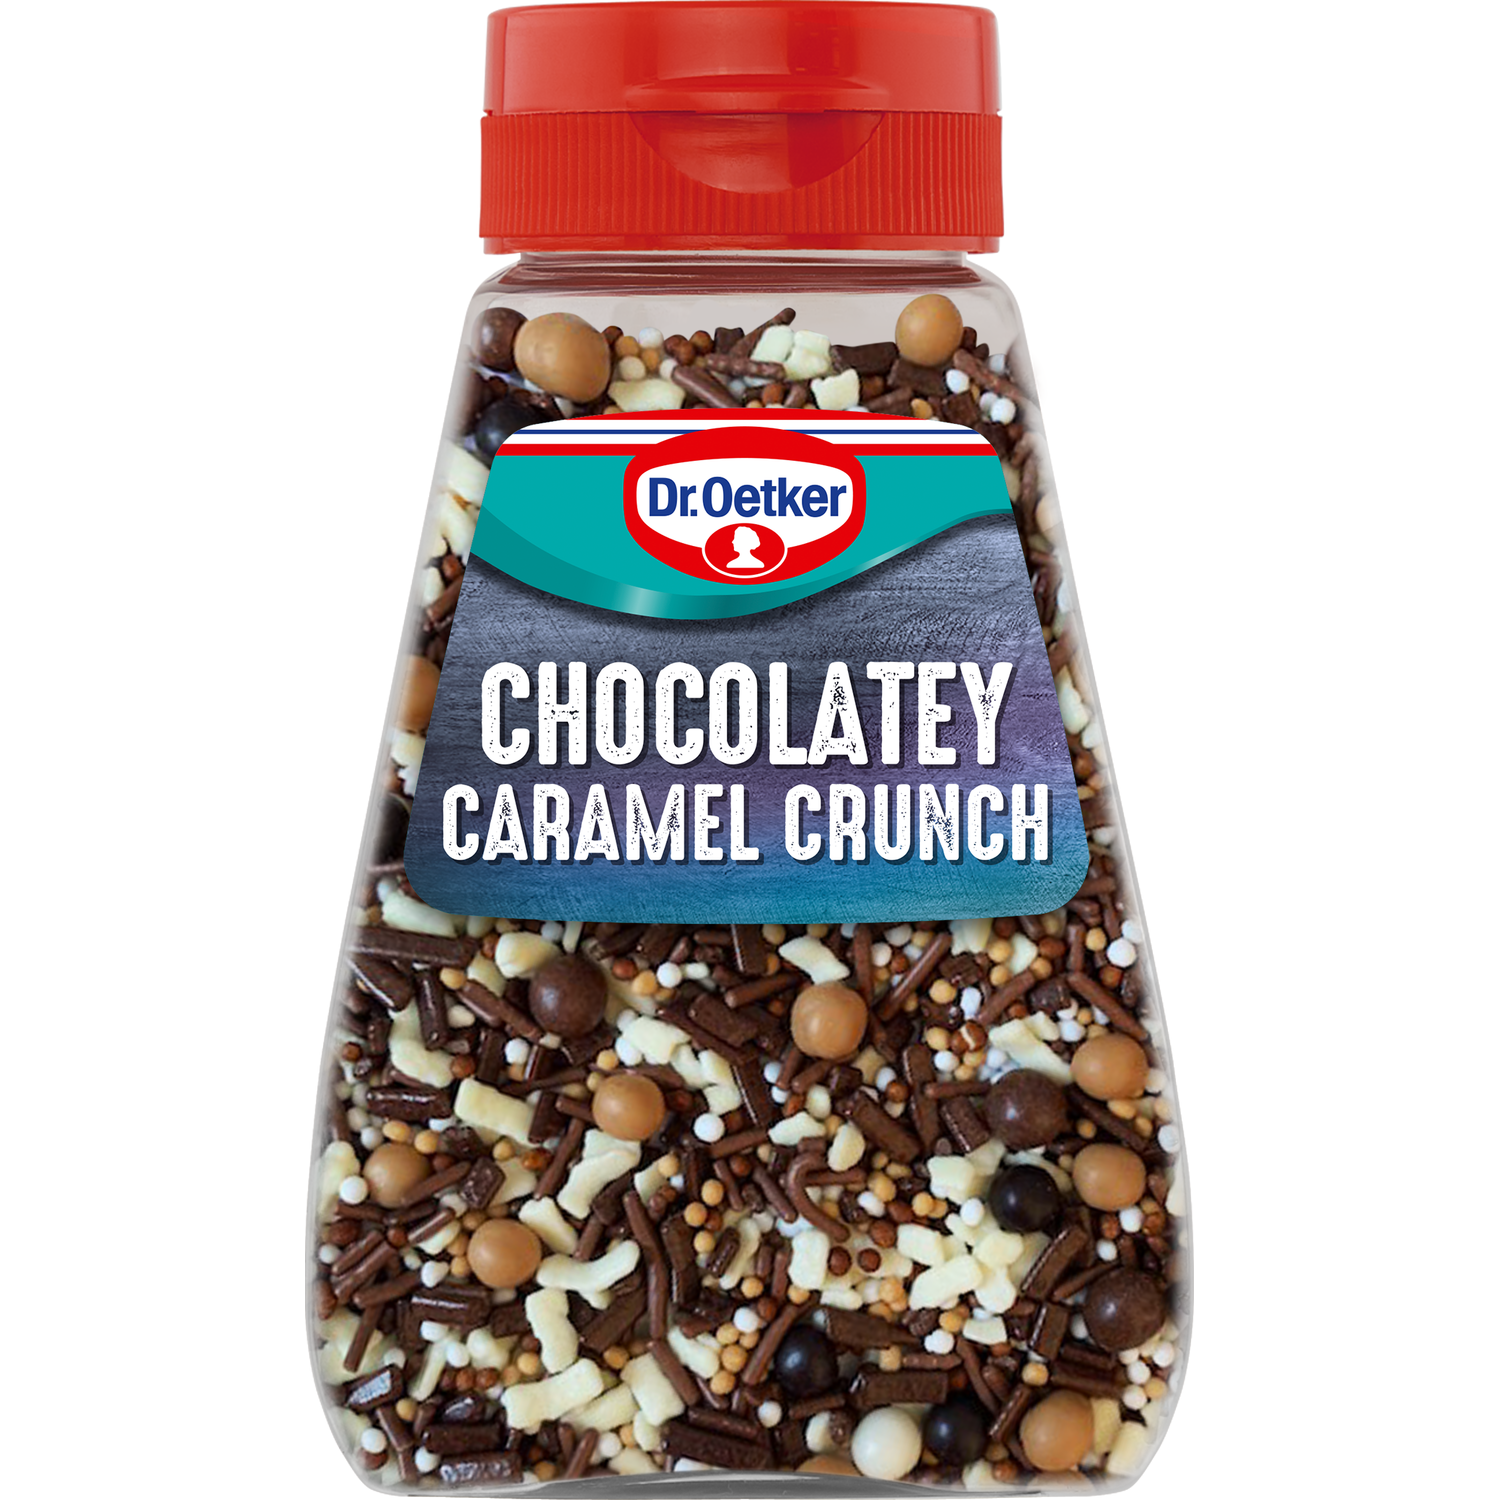 Dr. Oetker Chocolatey Caramel Crunch Image